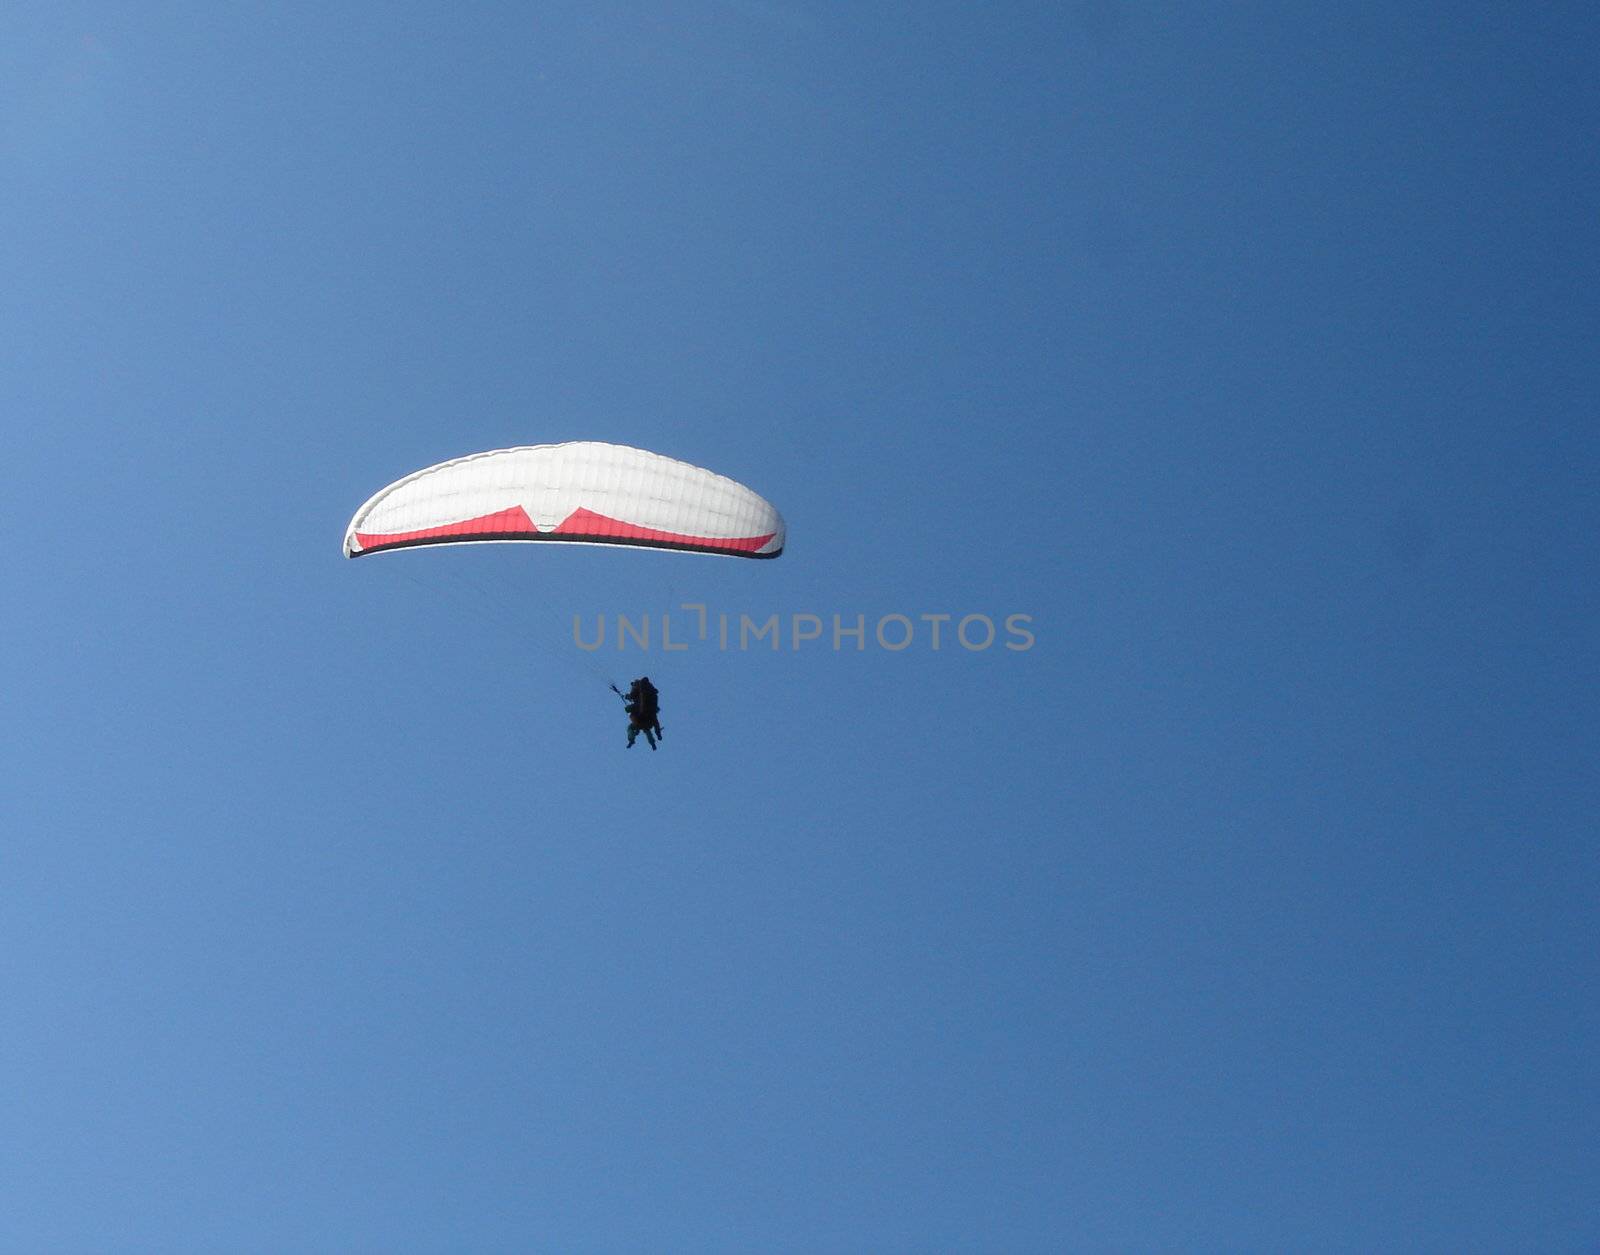 Paragliders by Elenaphotos21